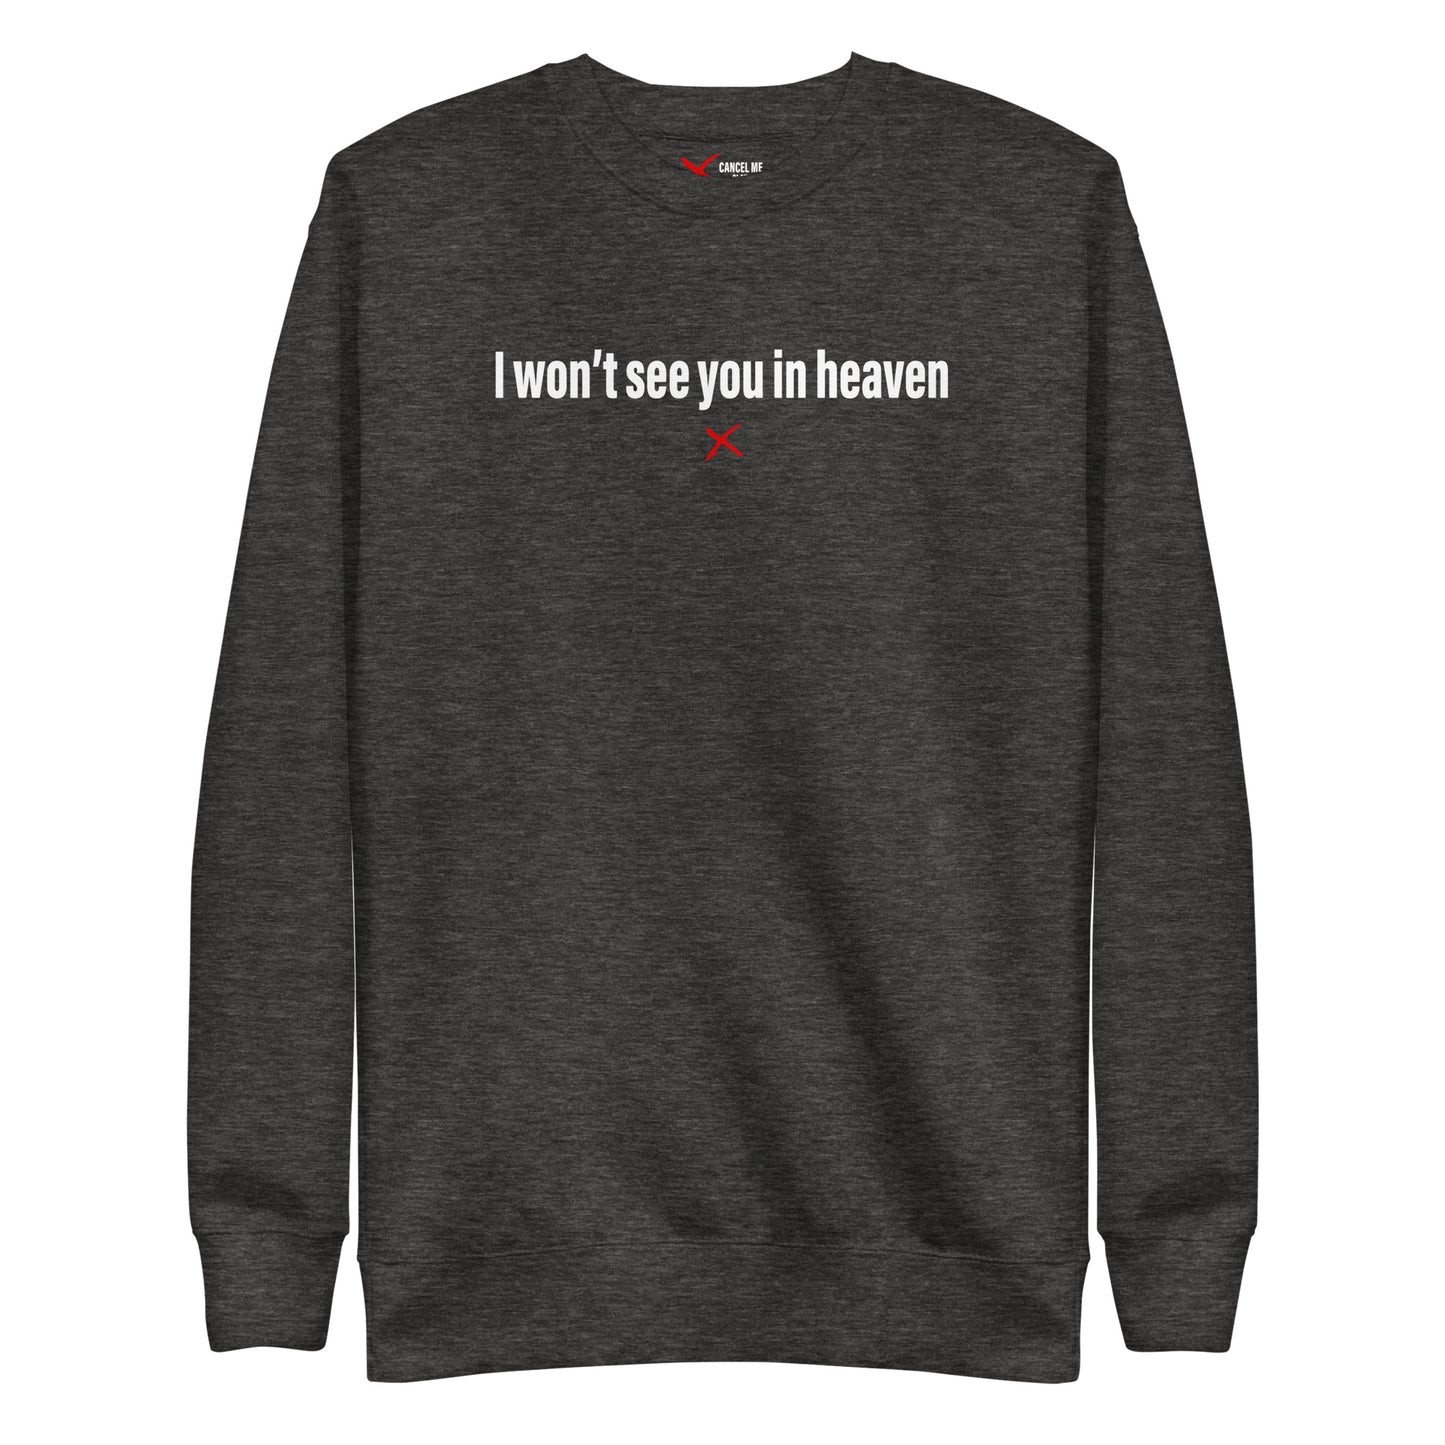 I won't see you in heaven - Sweatshirt